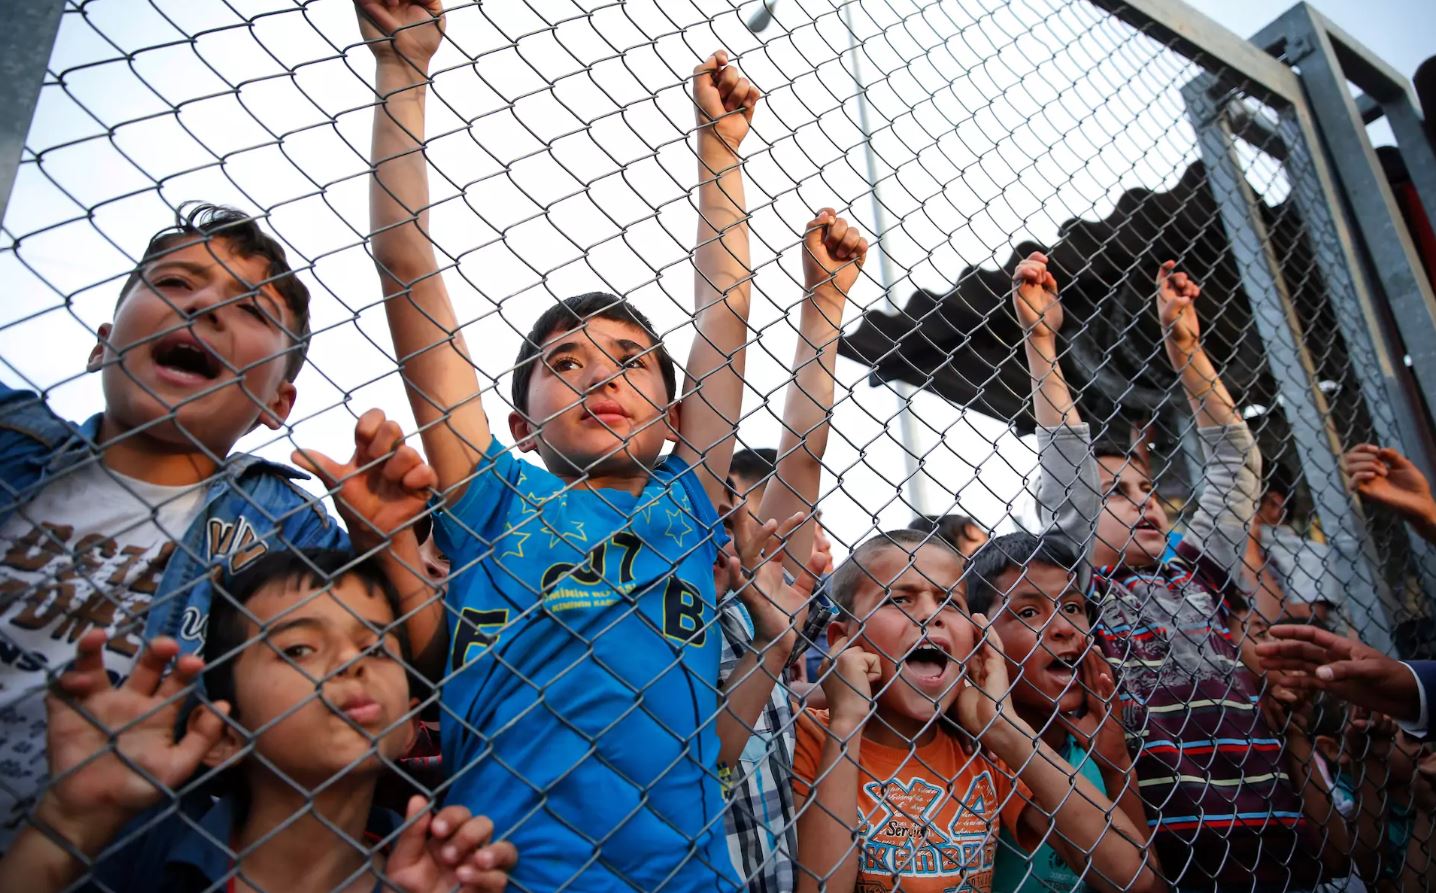 Syrian refugee children chant slogans behind a fence at a refugee camp in Turkey. (Lefteris Pitarakis / AP / The Telegraph)